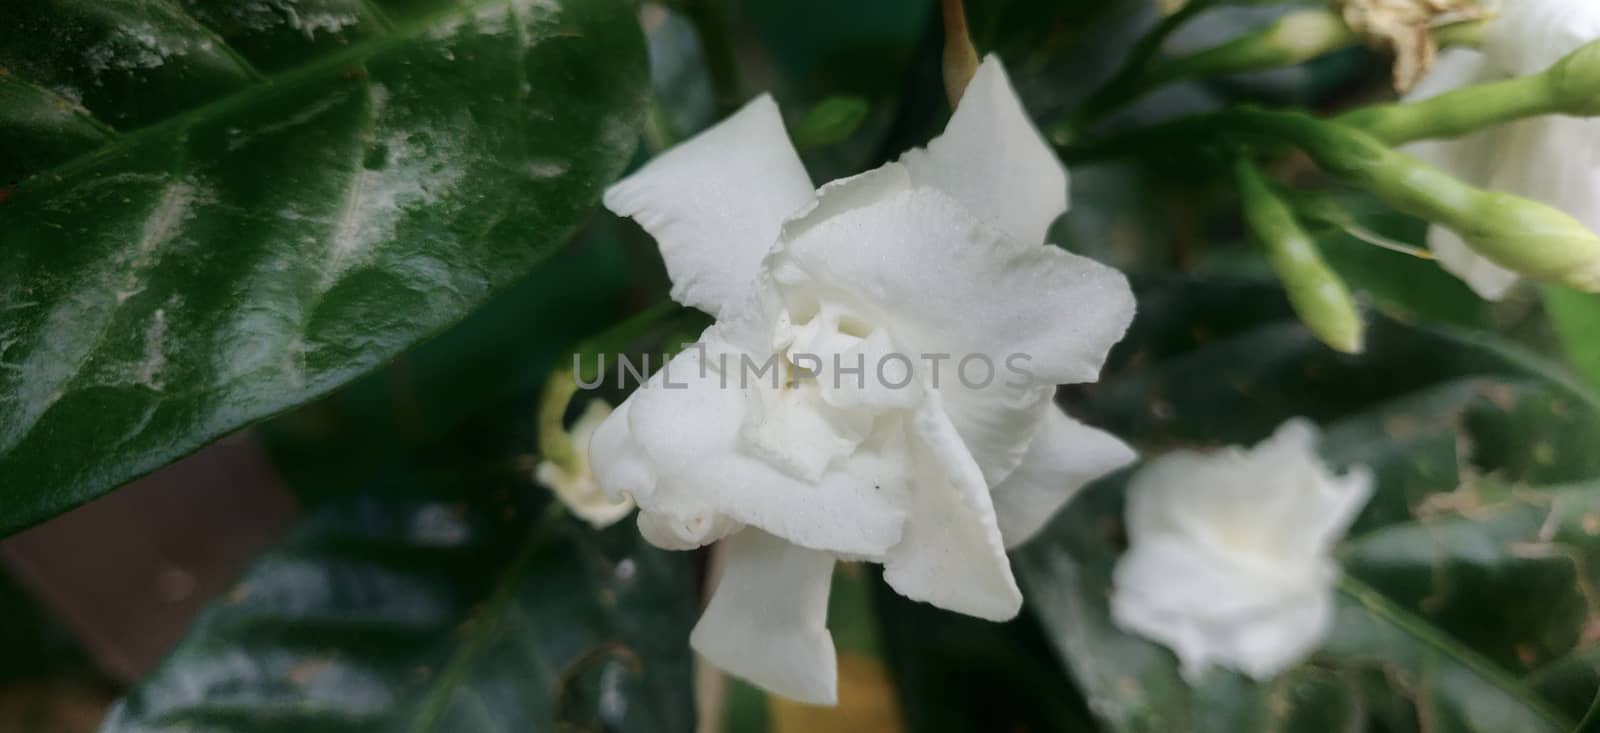 Crepe Jasmine in full bloom in closeup by mshivangi92